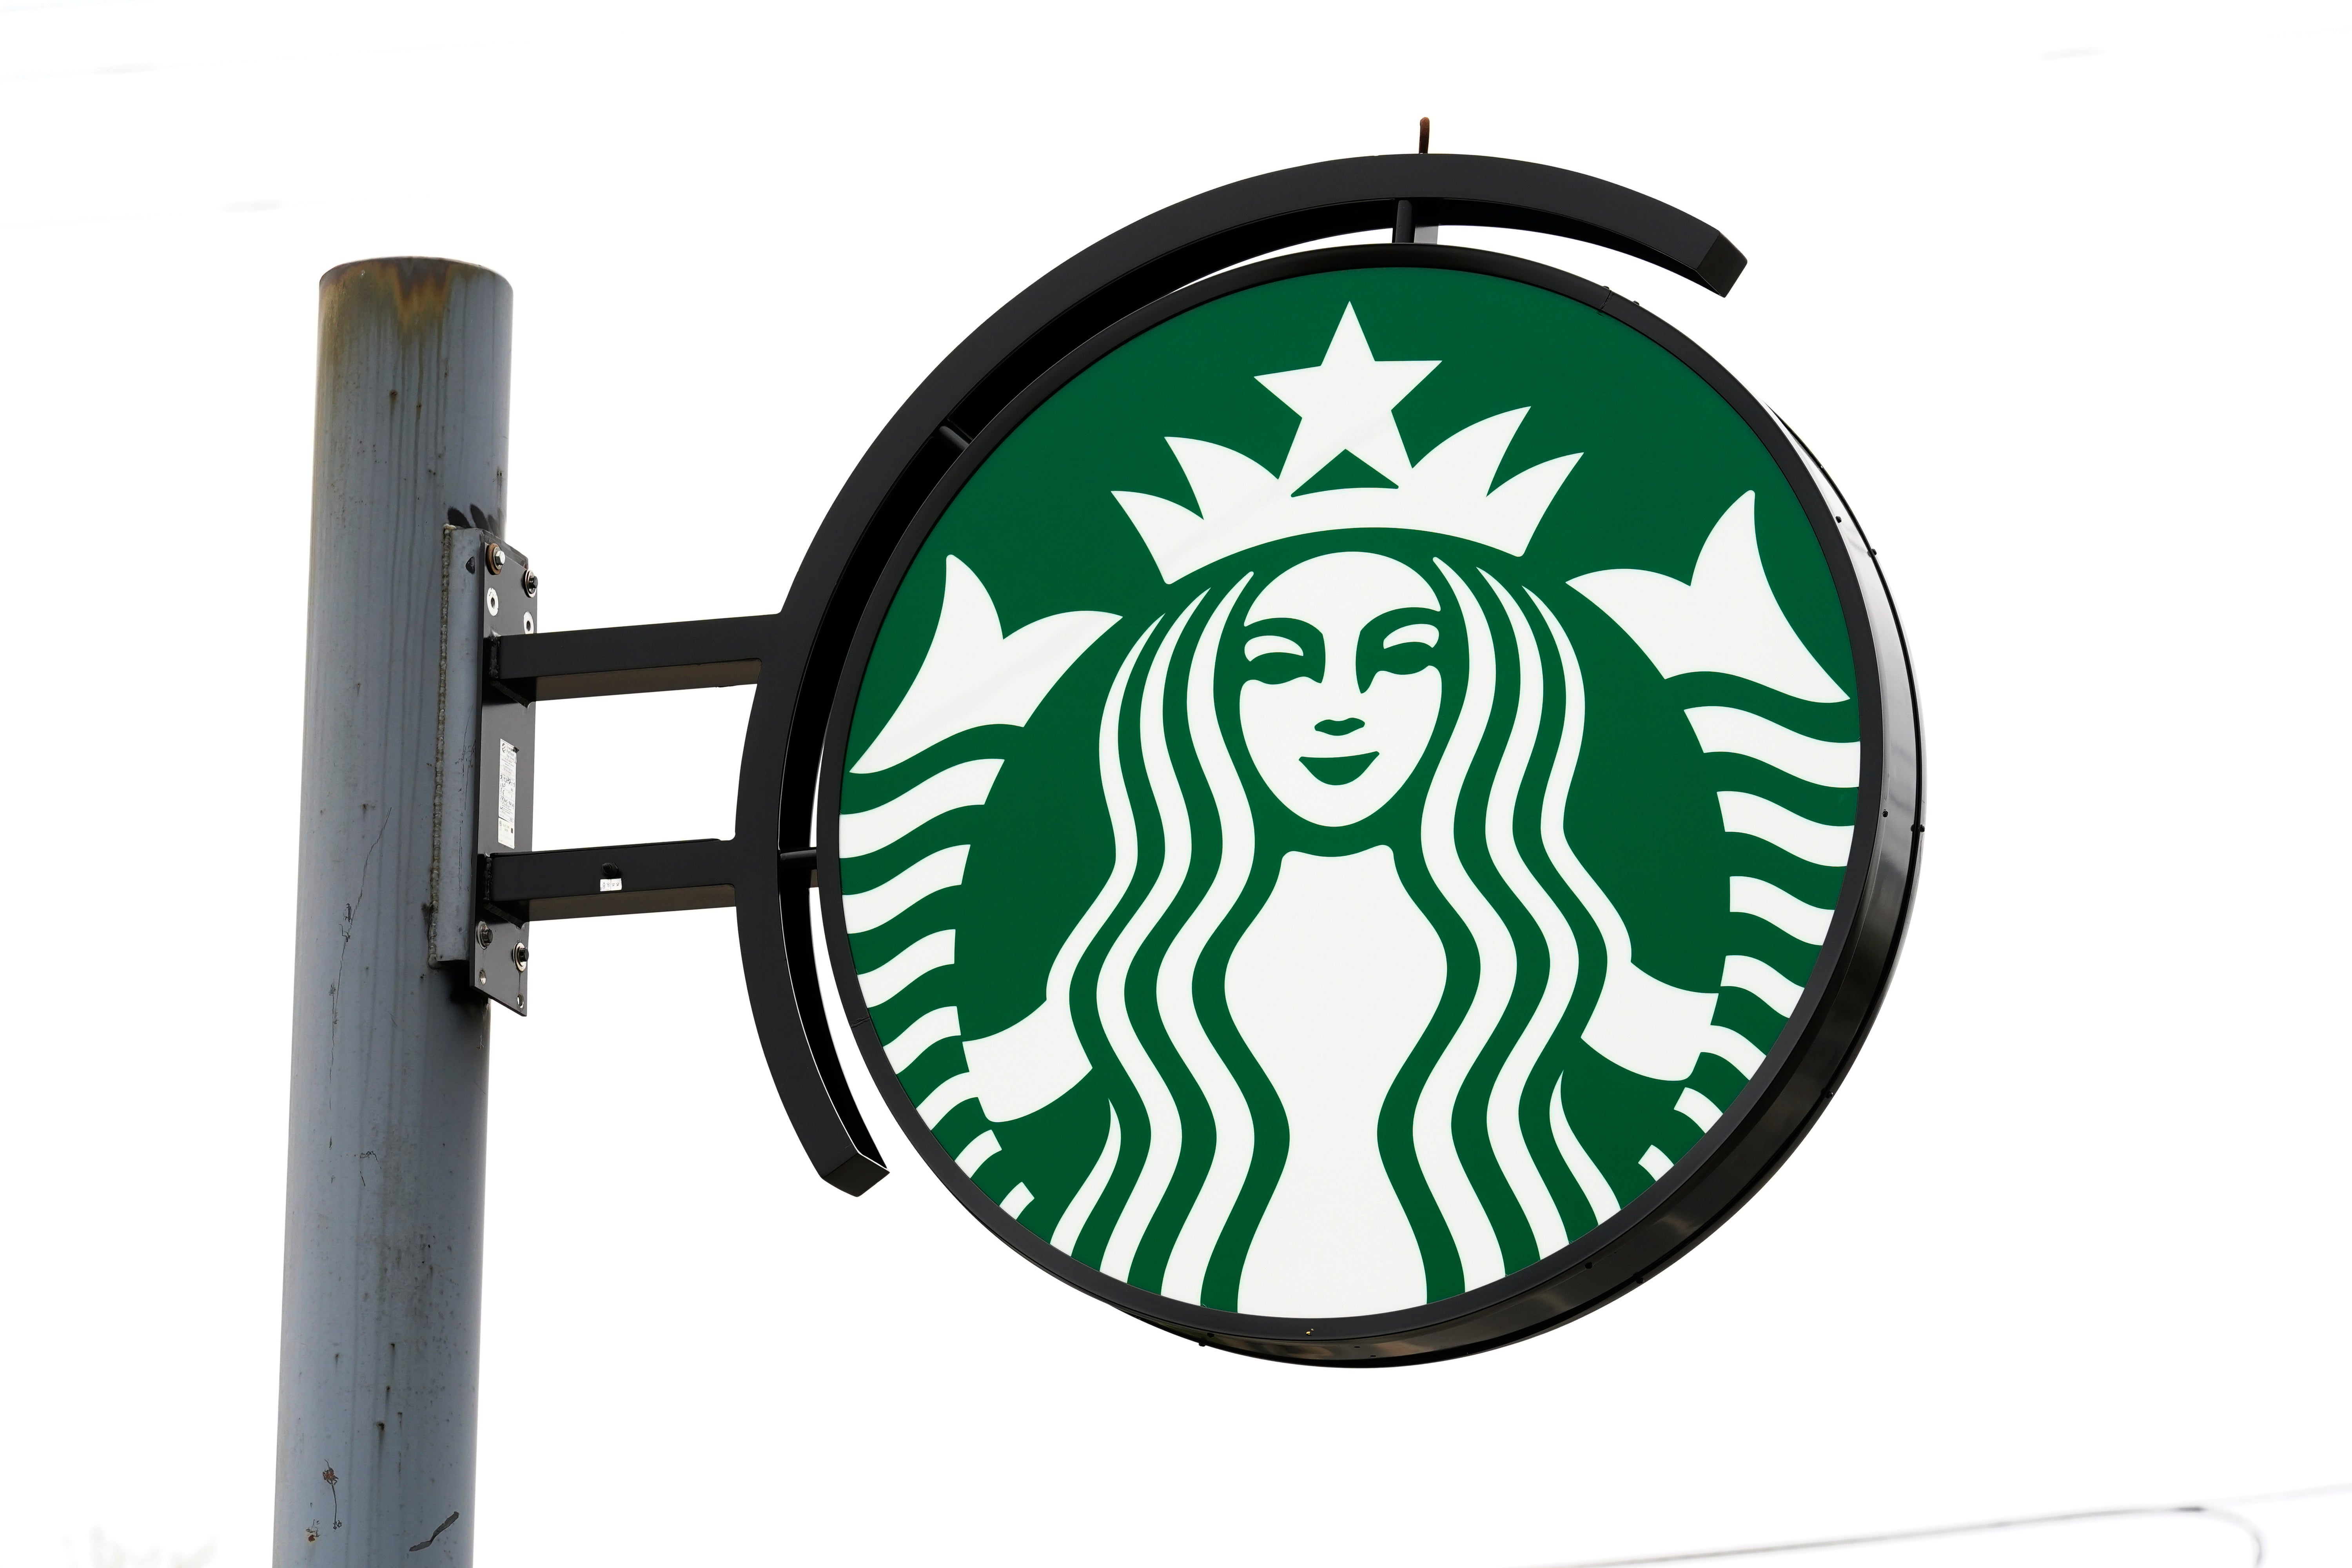 Starbucks Union Charge